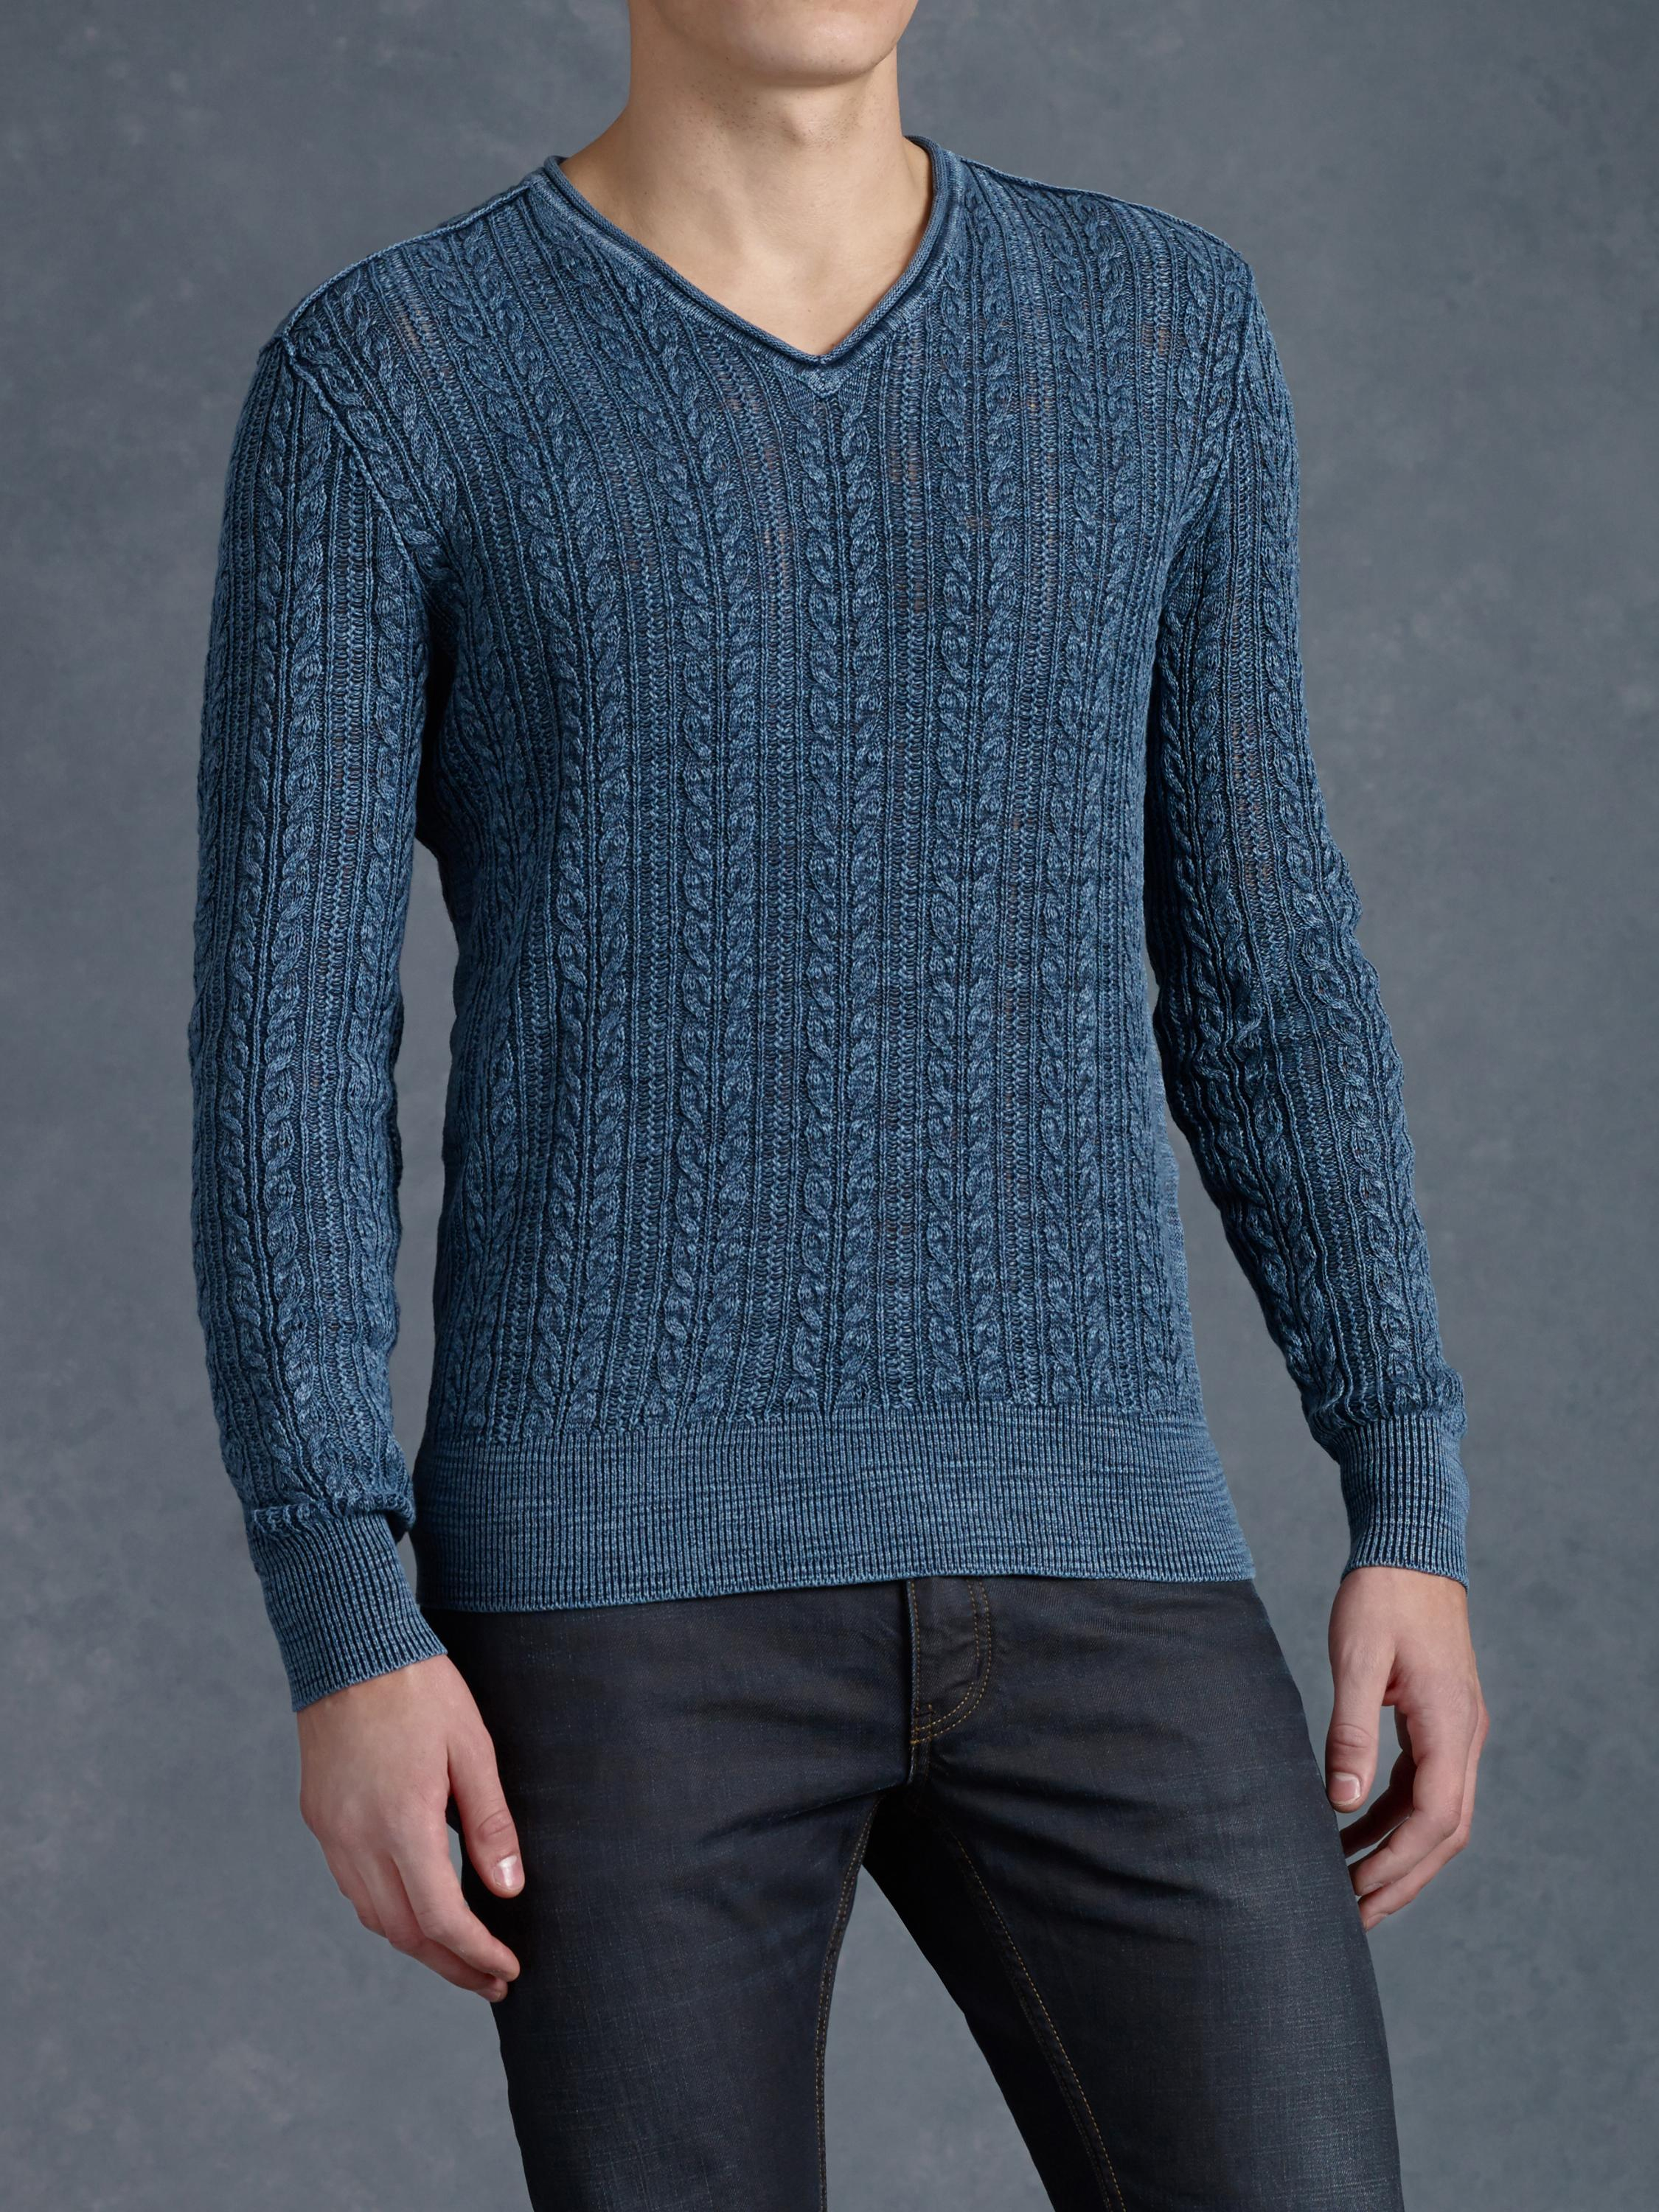 Lyst - John Varvatos V-Neck Cable Knit Sweater in Blue for Men